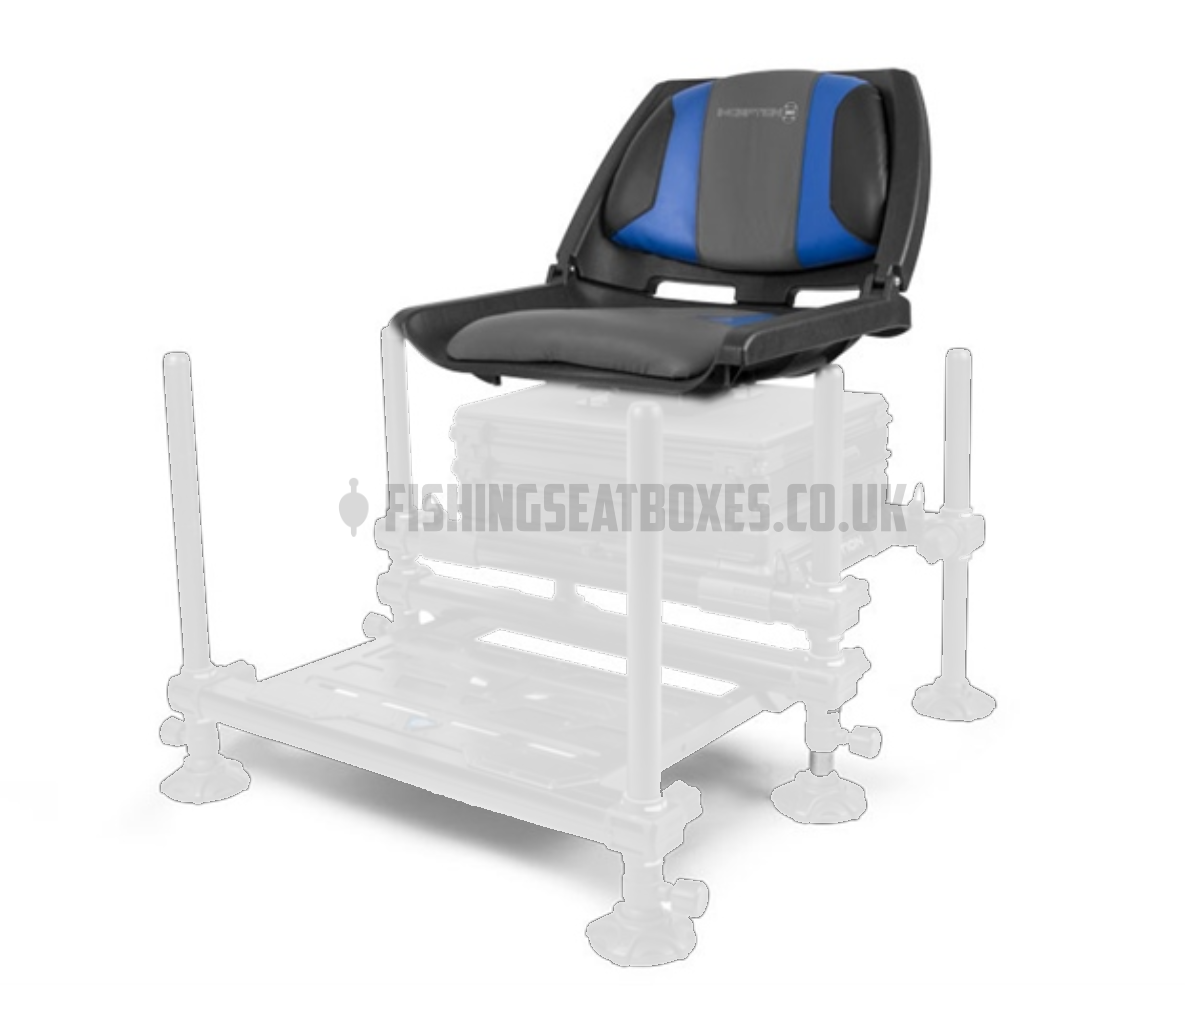 Image of the preston innovations inception 360 swivel seat